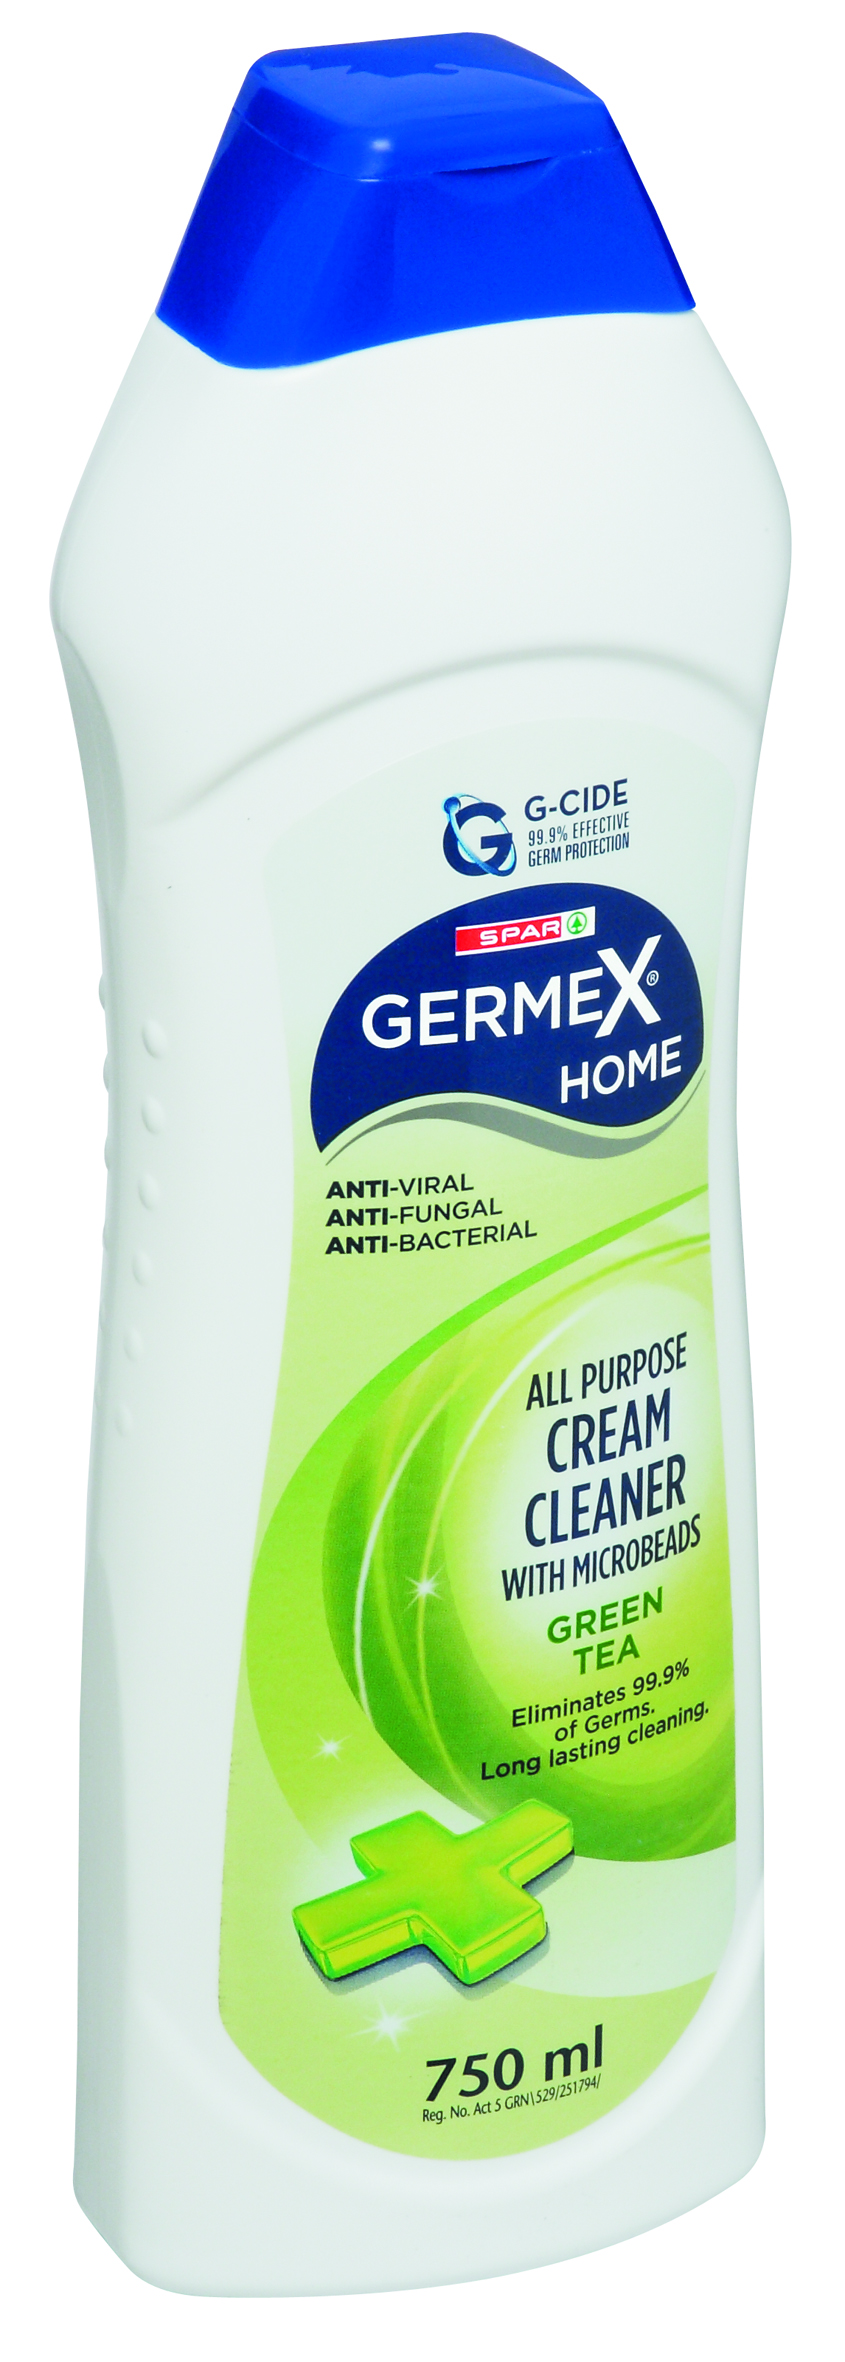 germex apc cream cleaner green tea